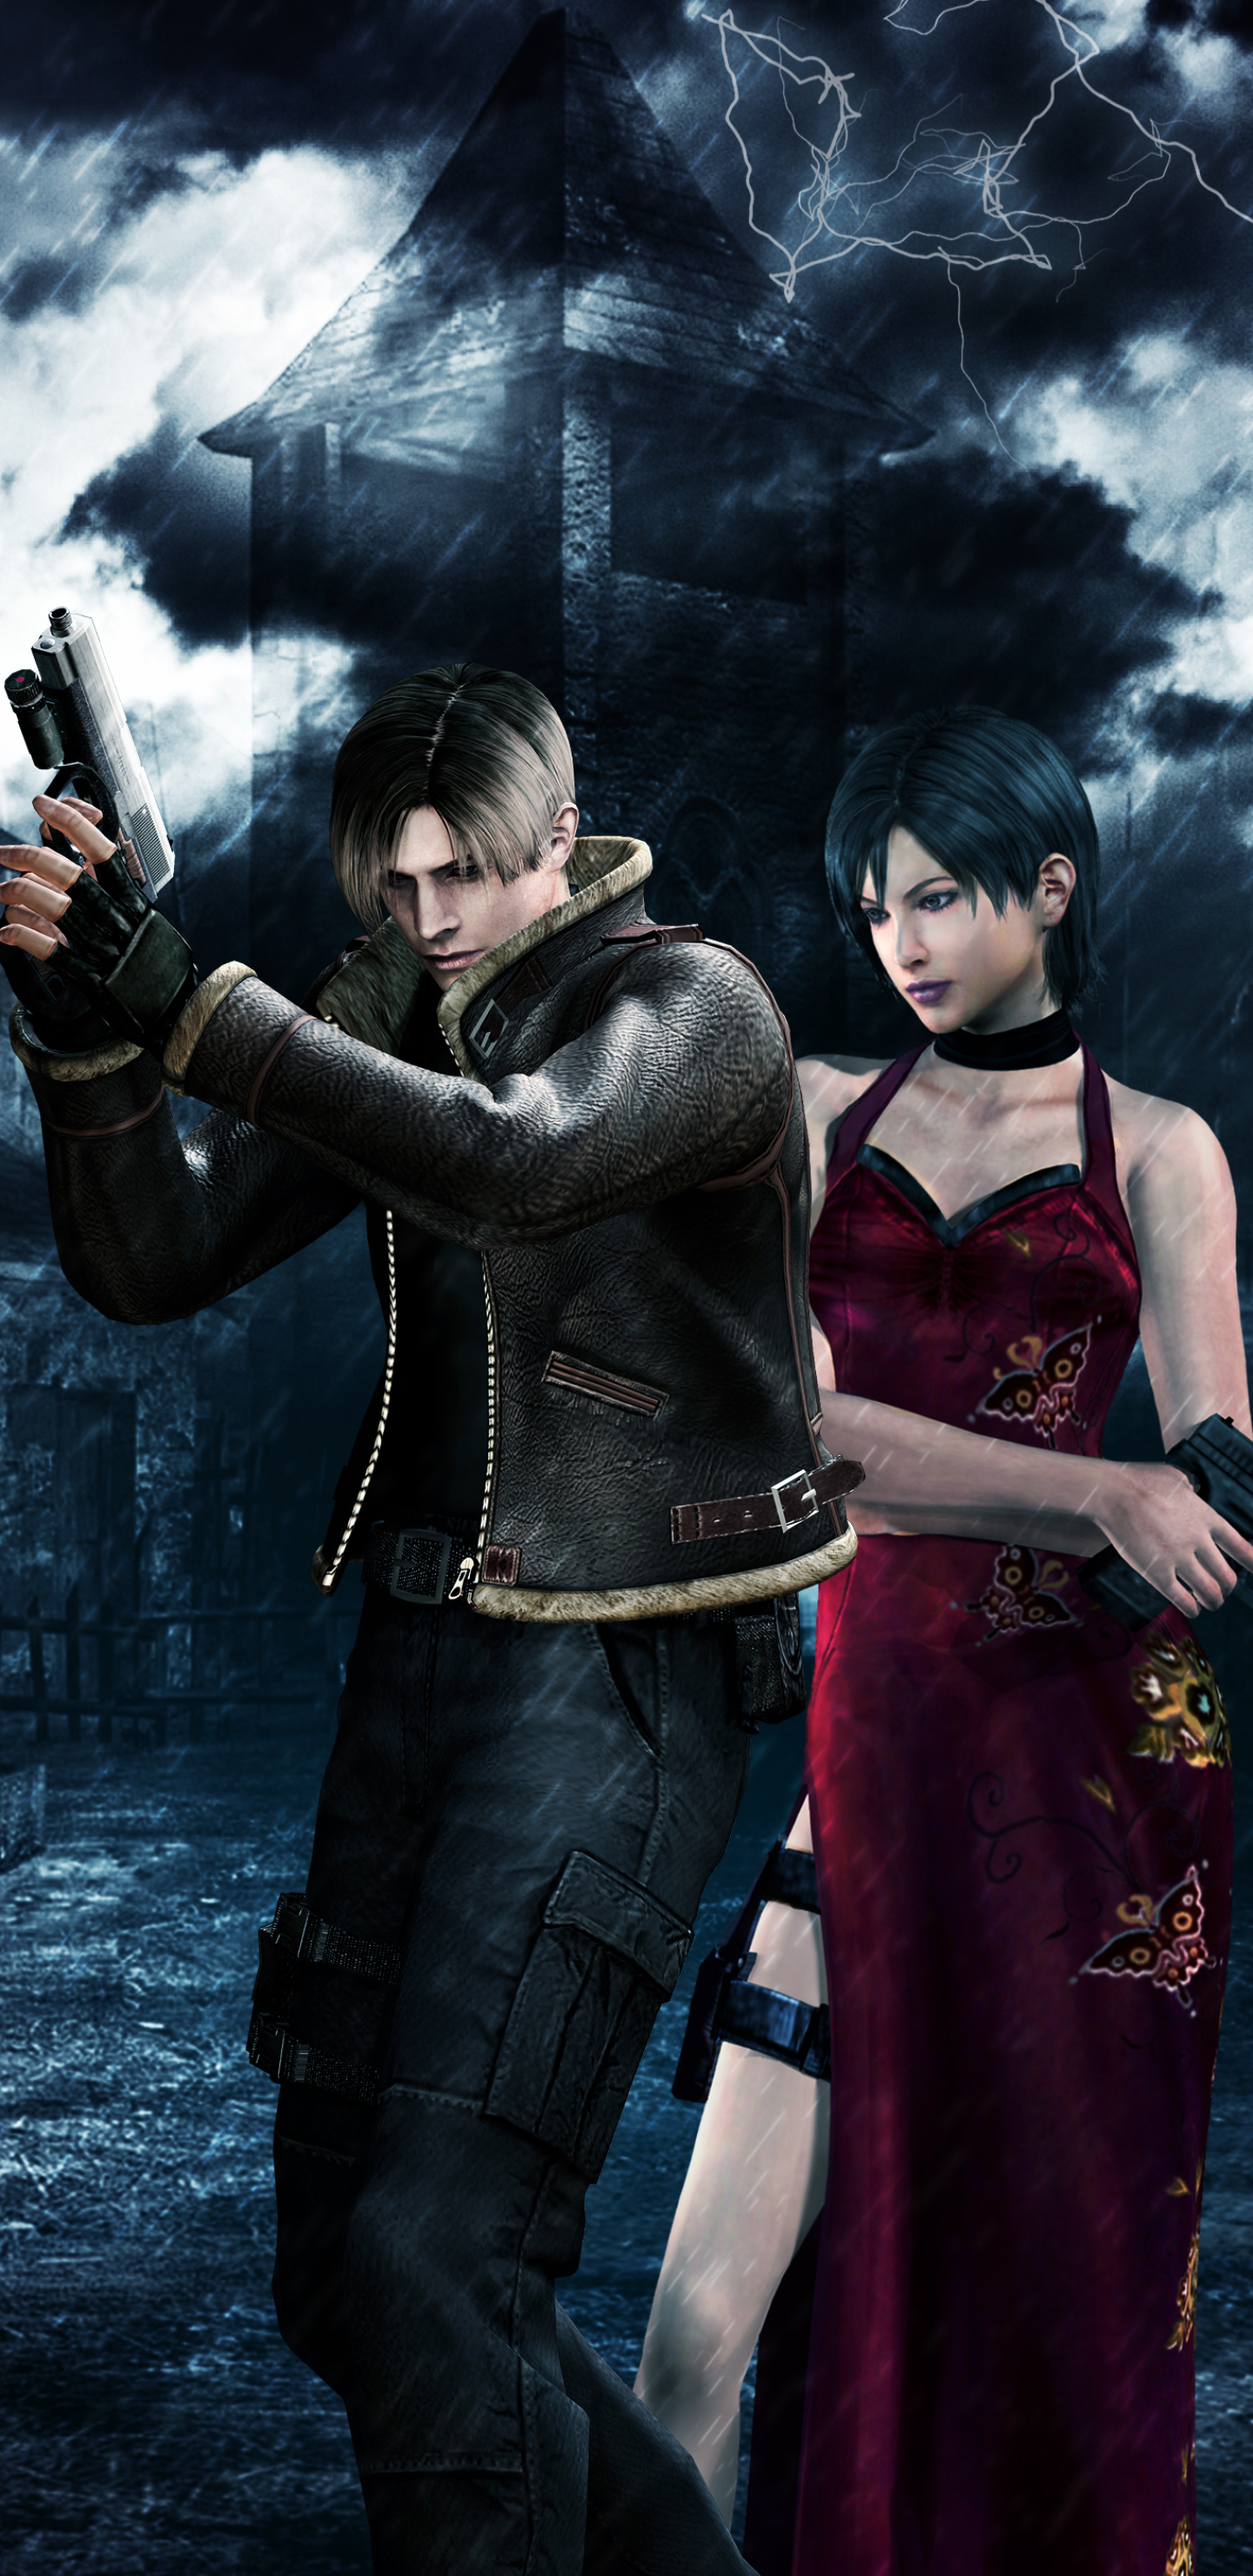 Video Game Resident Evil 4 HD Wallpaper